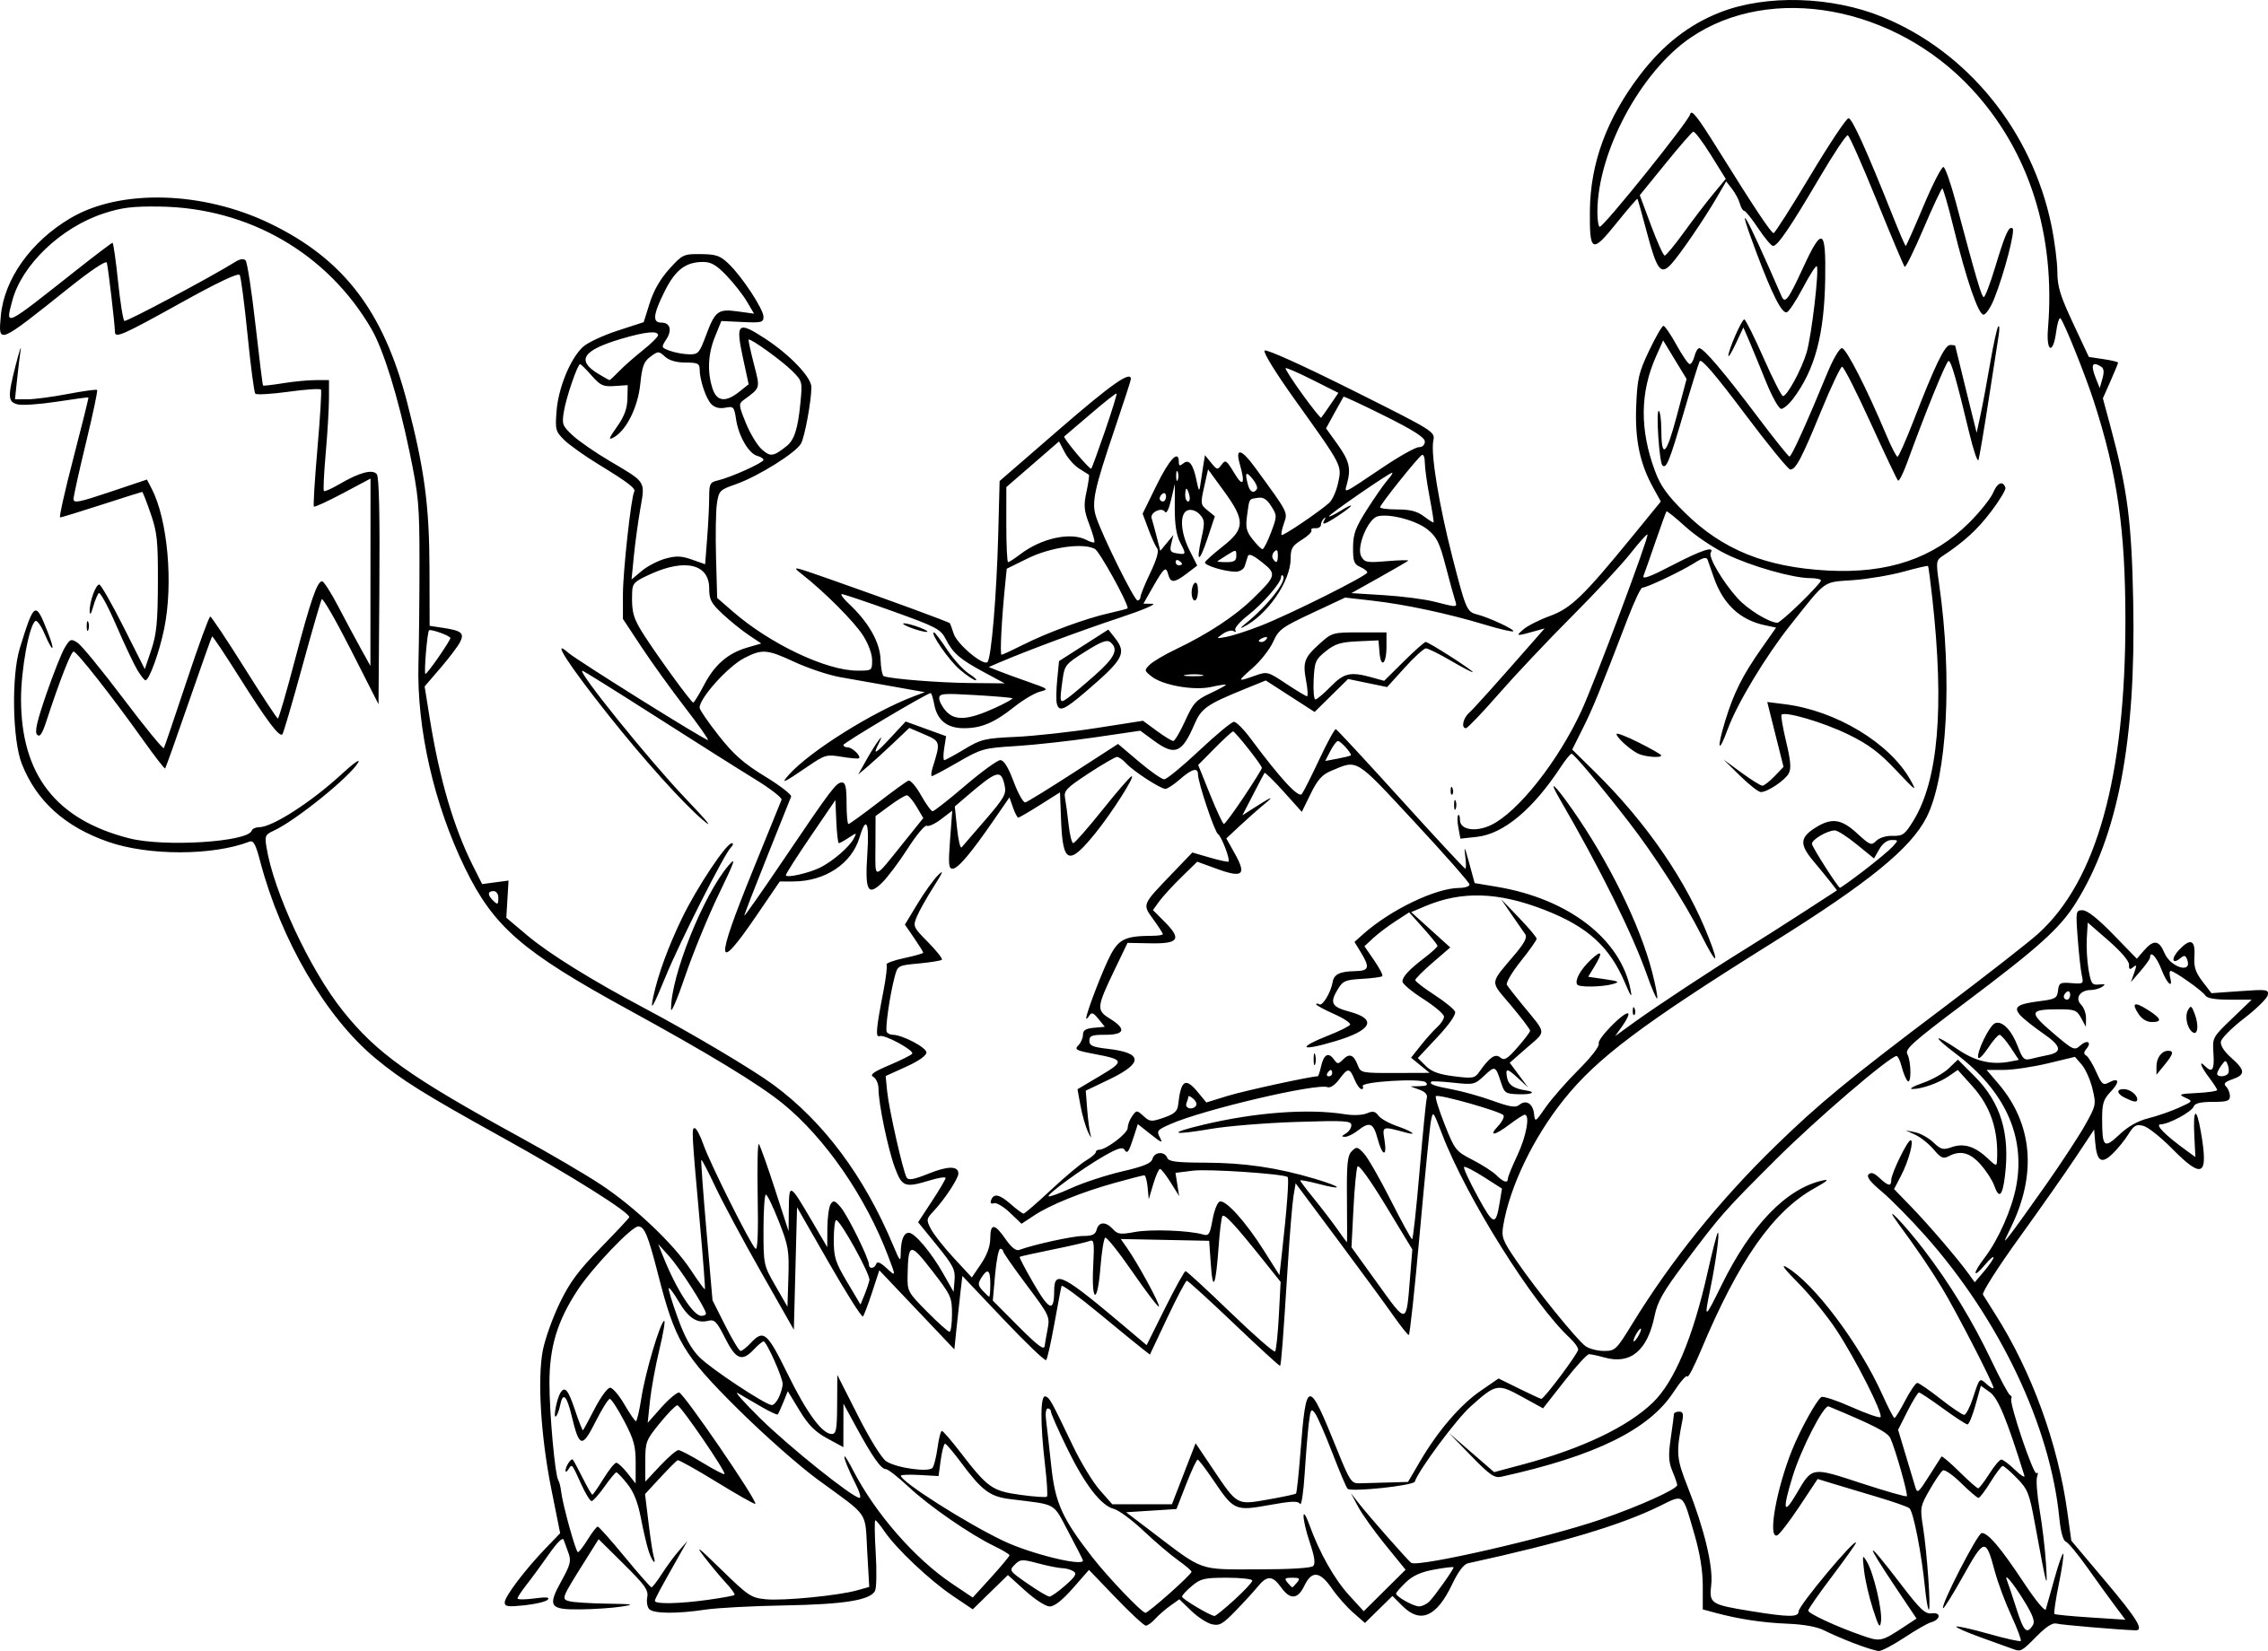 Pokemon Guzzlord coloring page